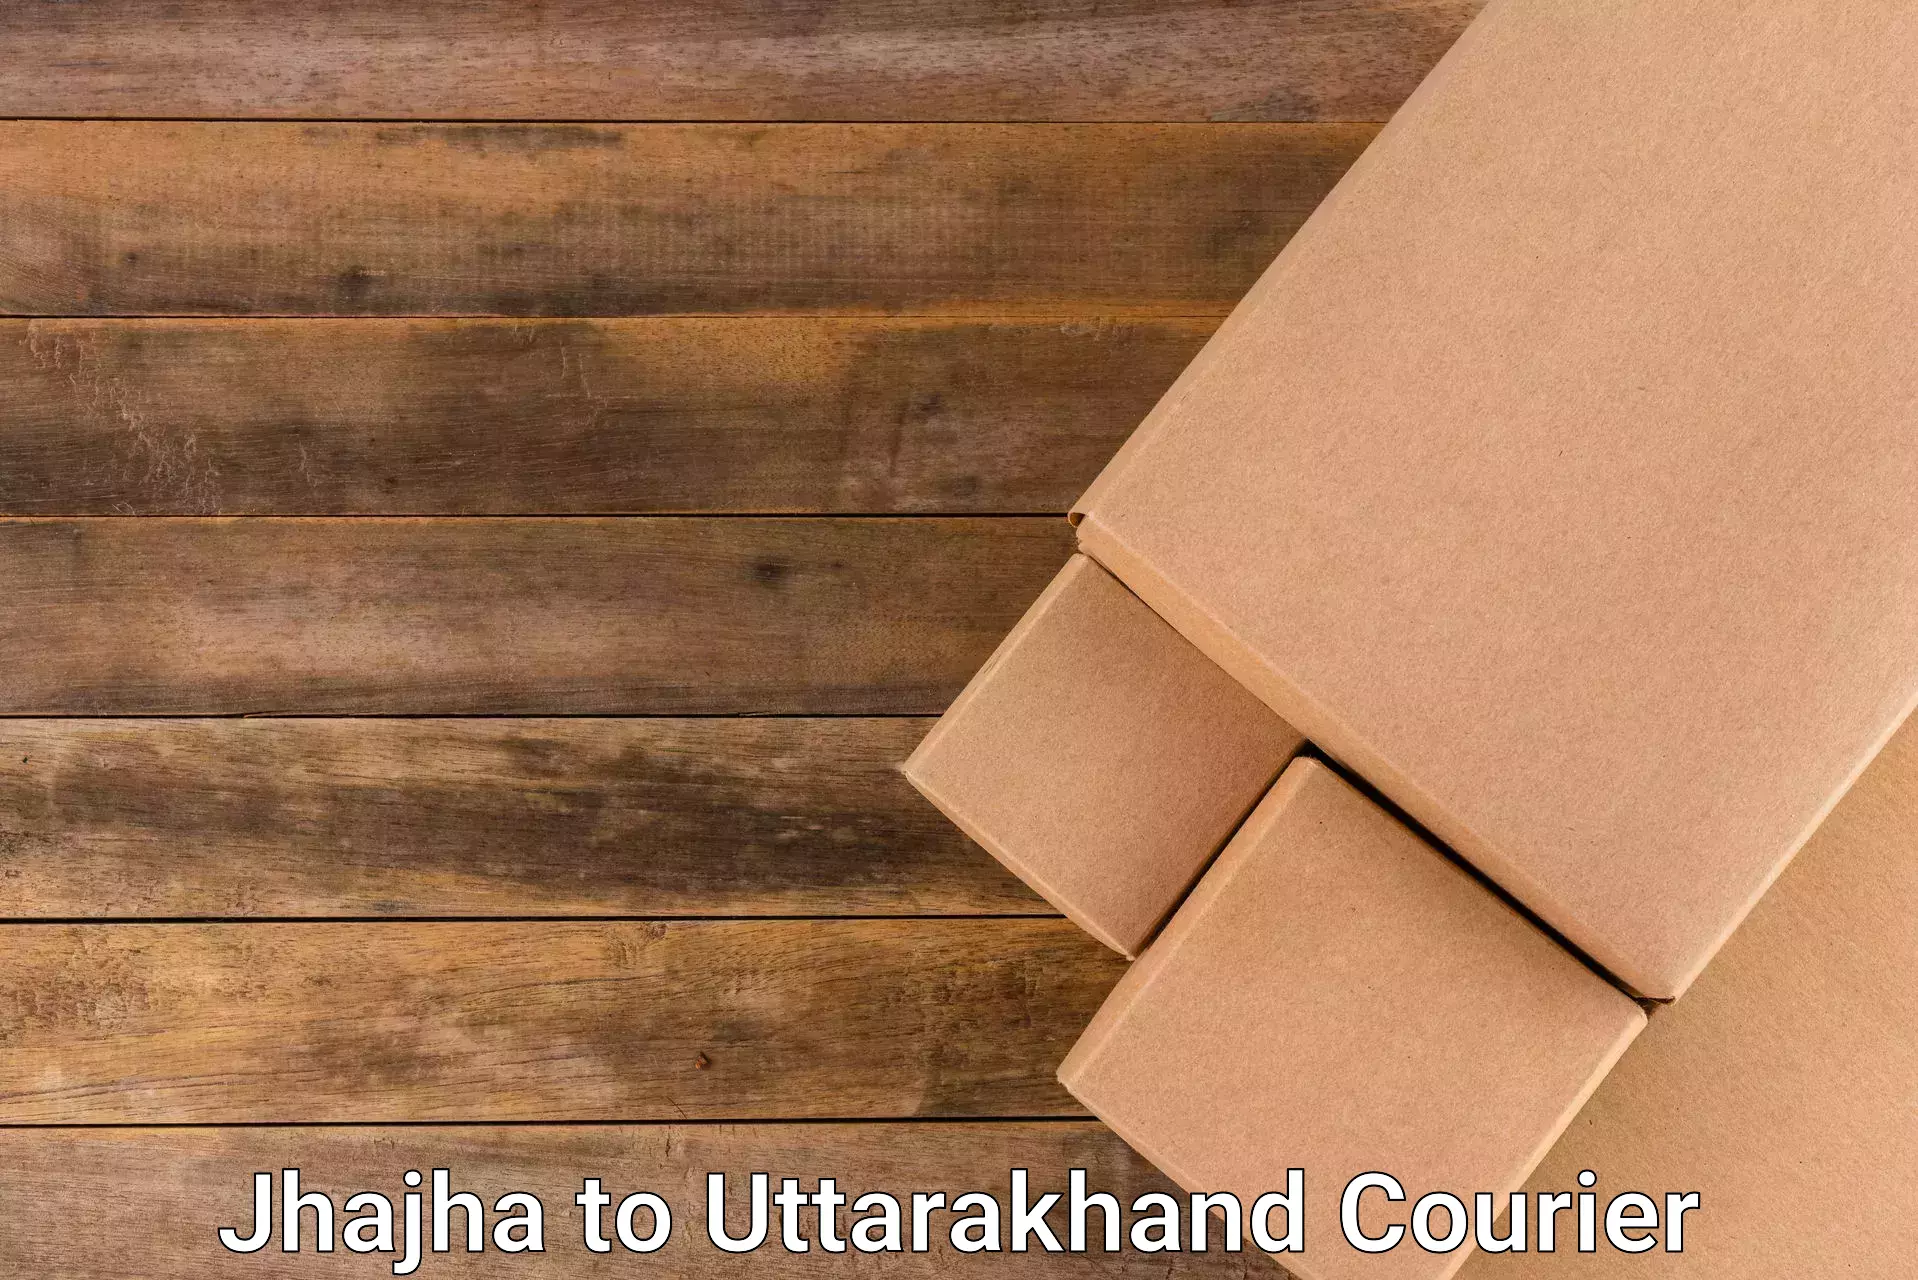 Courier service comparison Jhajha to Chamoli